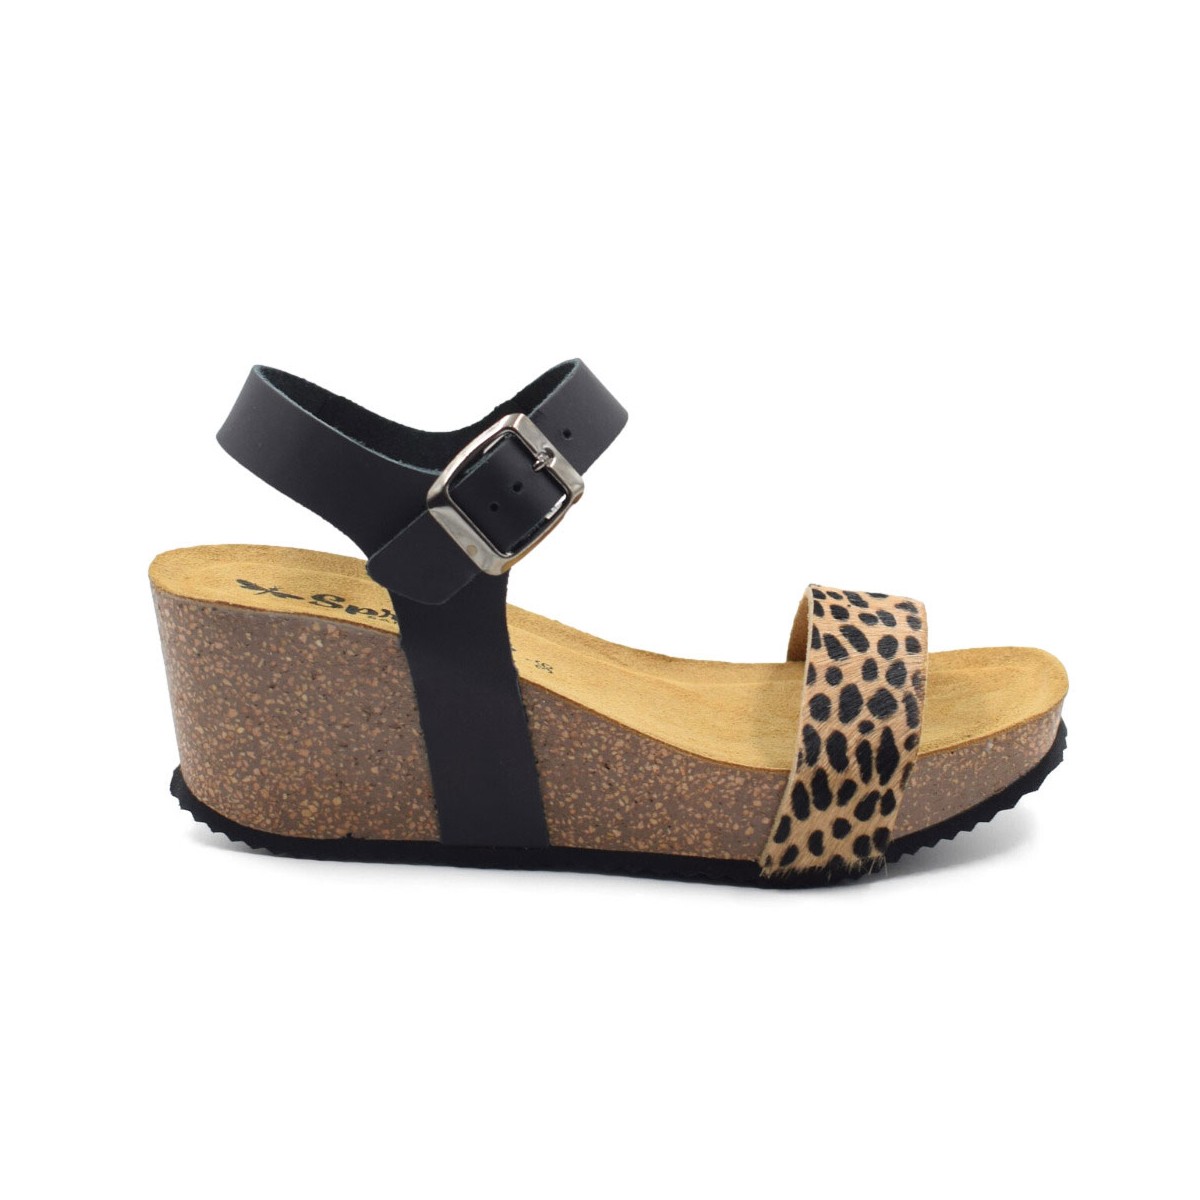 Black leather bio wedge sandals by Biocomfort